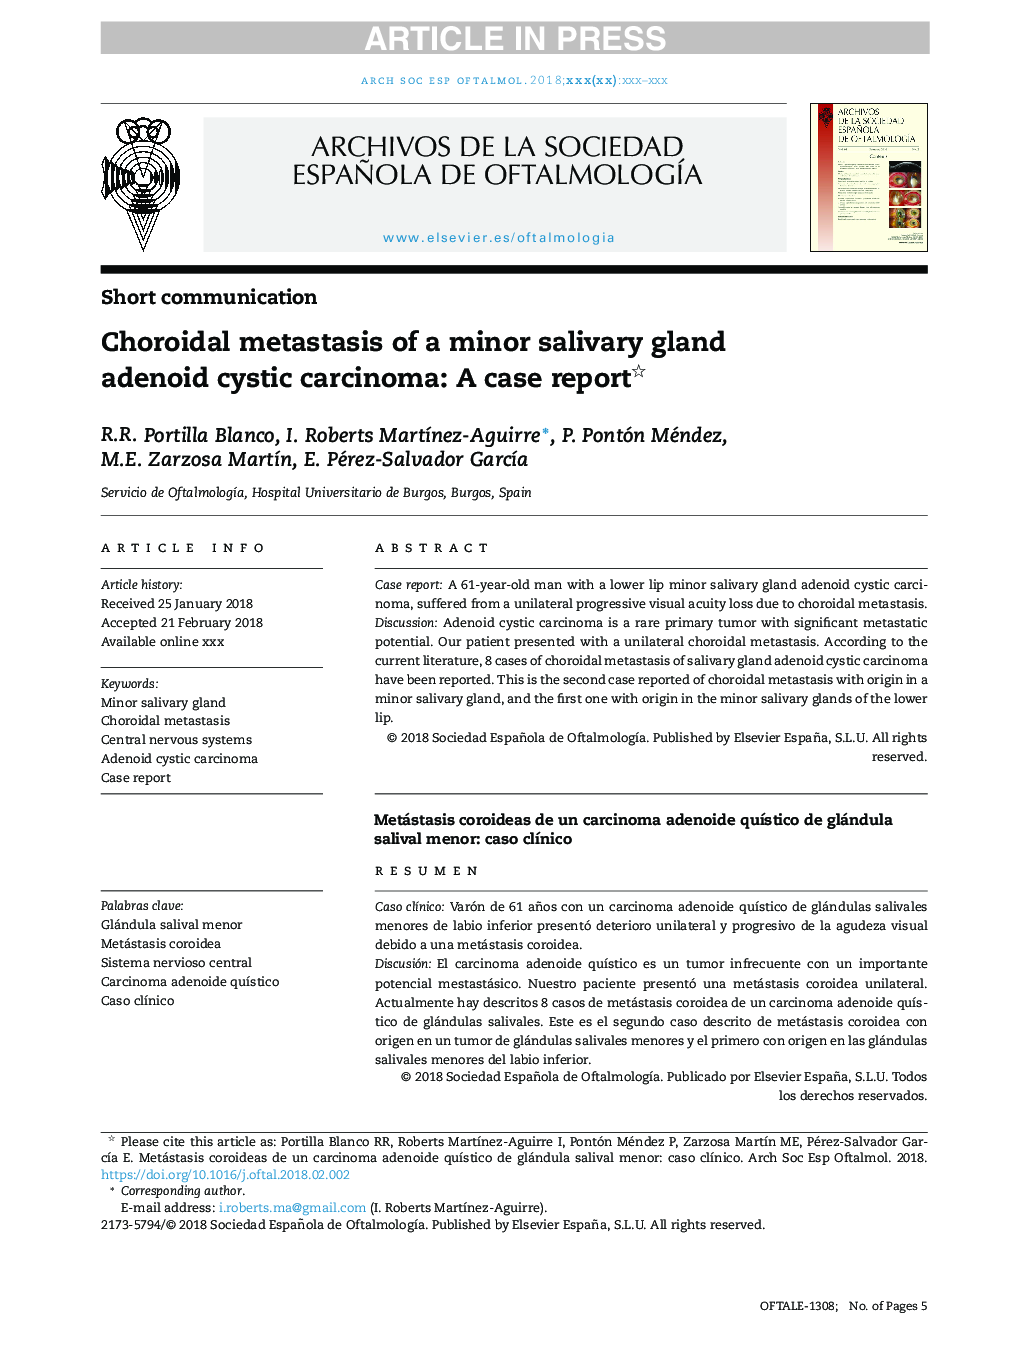 Choroidal metastasis of a minor salivary gland adenoid cystic carcinoma: A case report